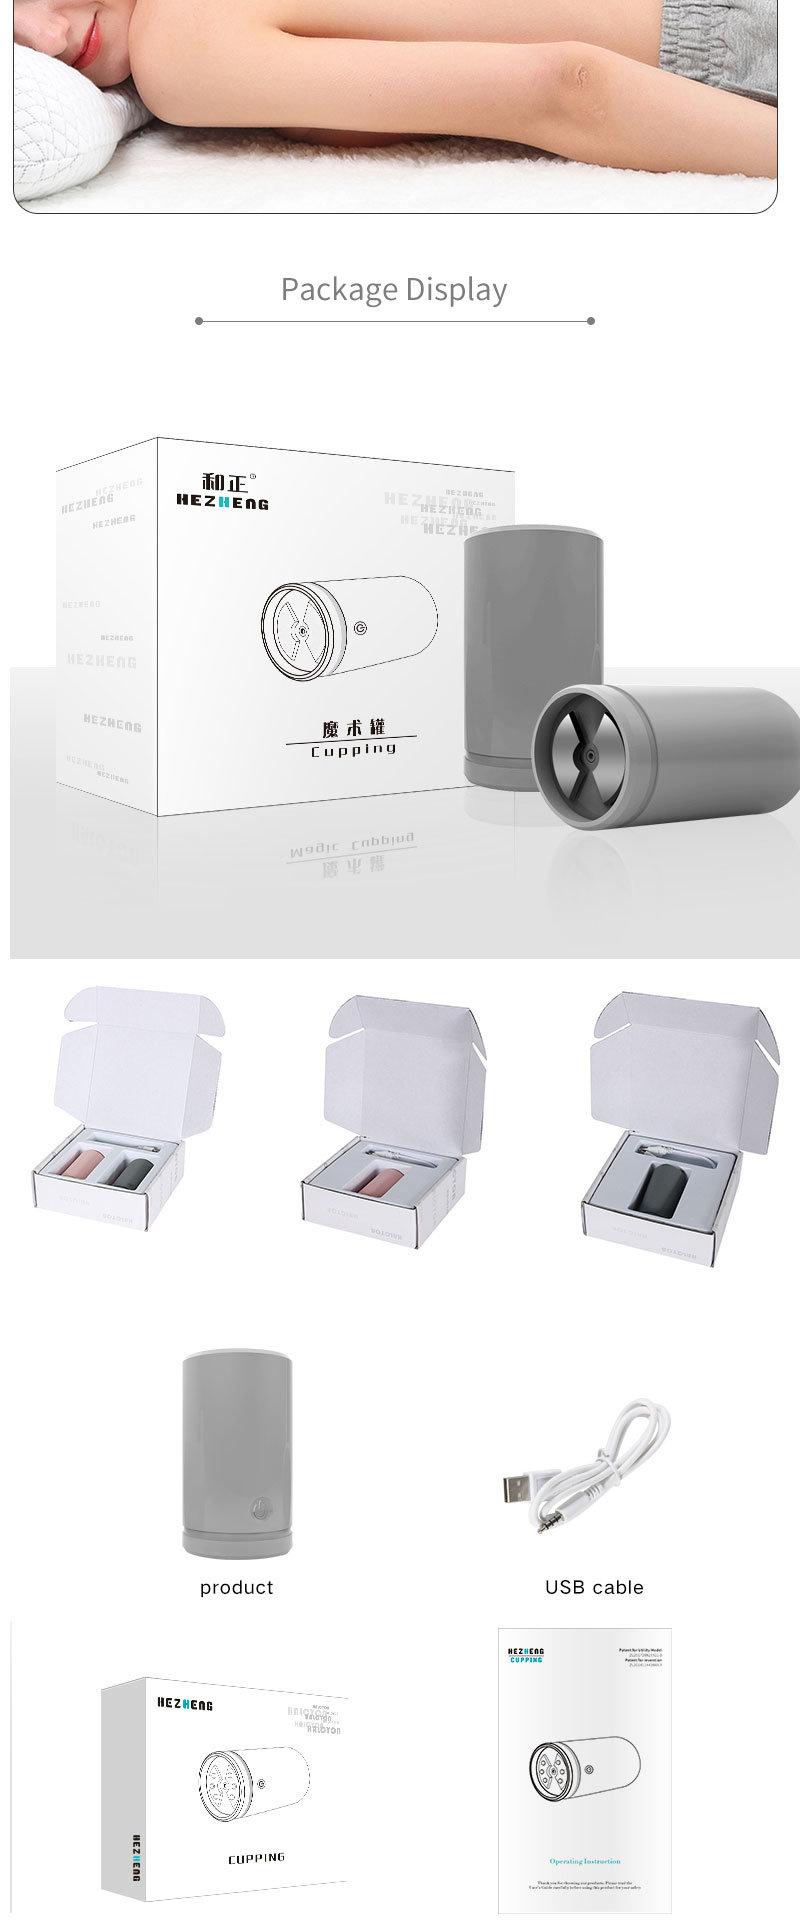 Hezheng Hot Sale OEM Logo Massage Cups Silicone Massage Vacuum Cupping